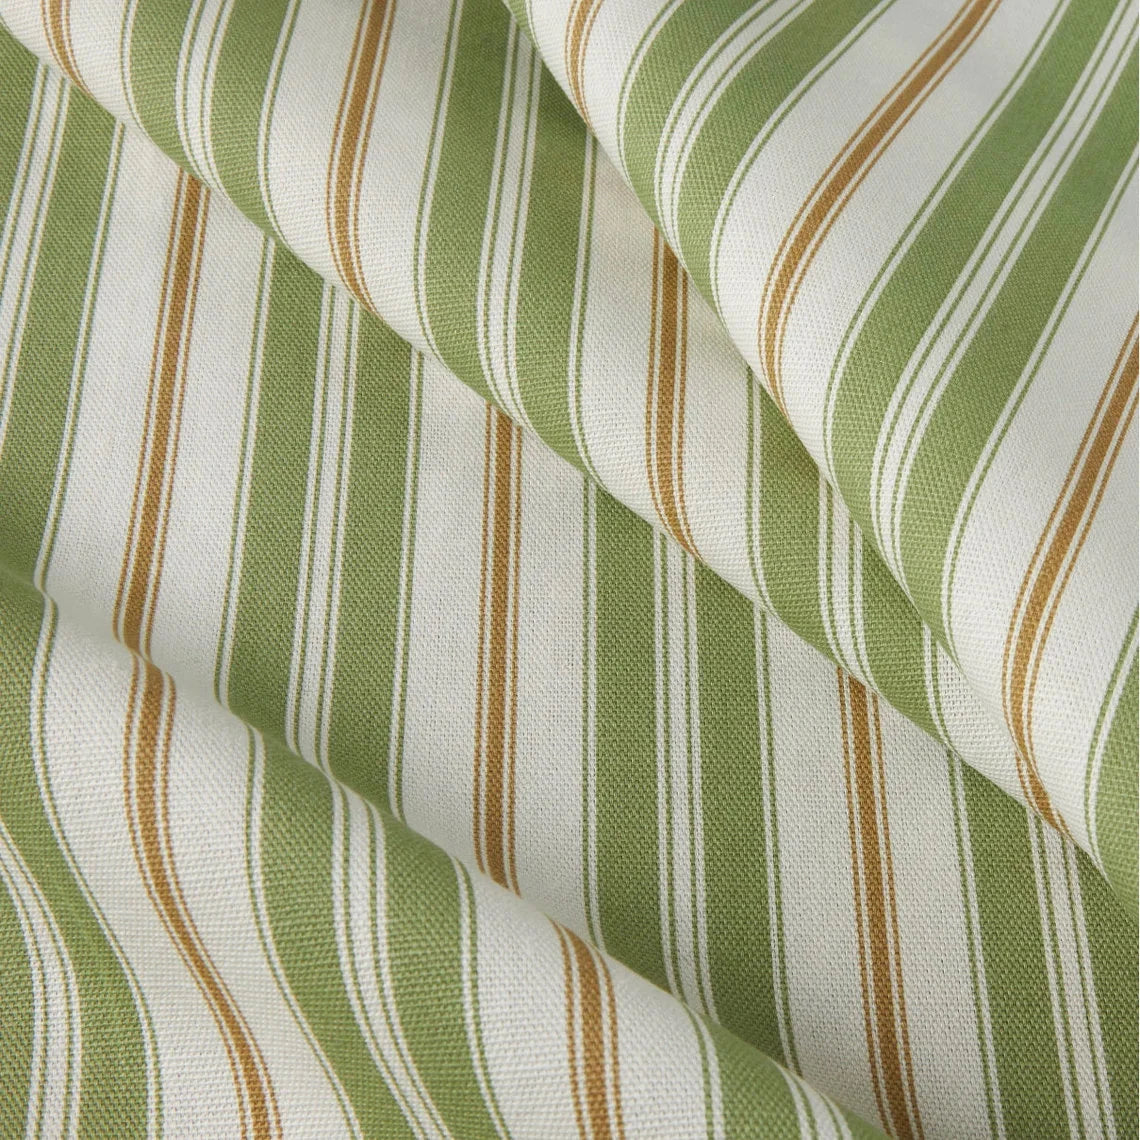 tailored valance in newbury aloe green stripe- green, brown, white